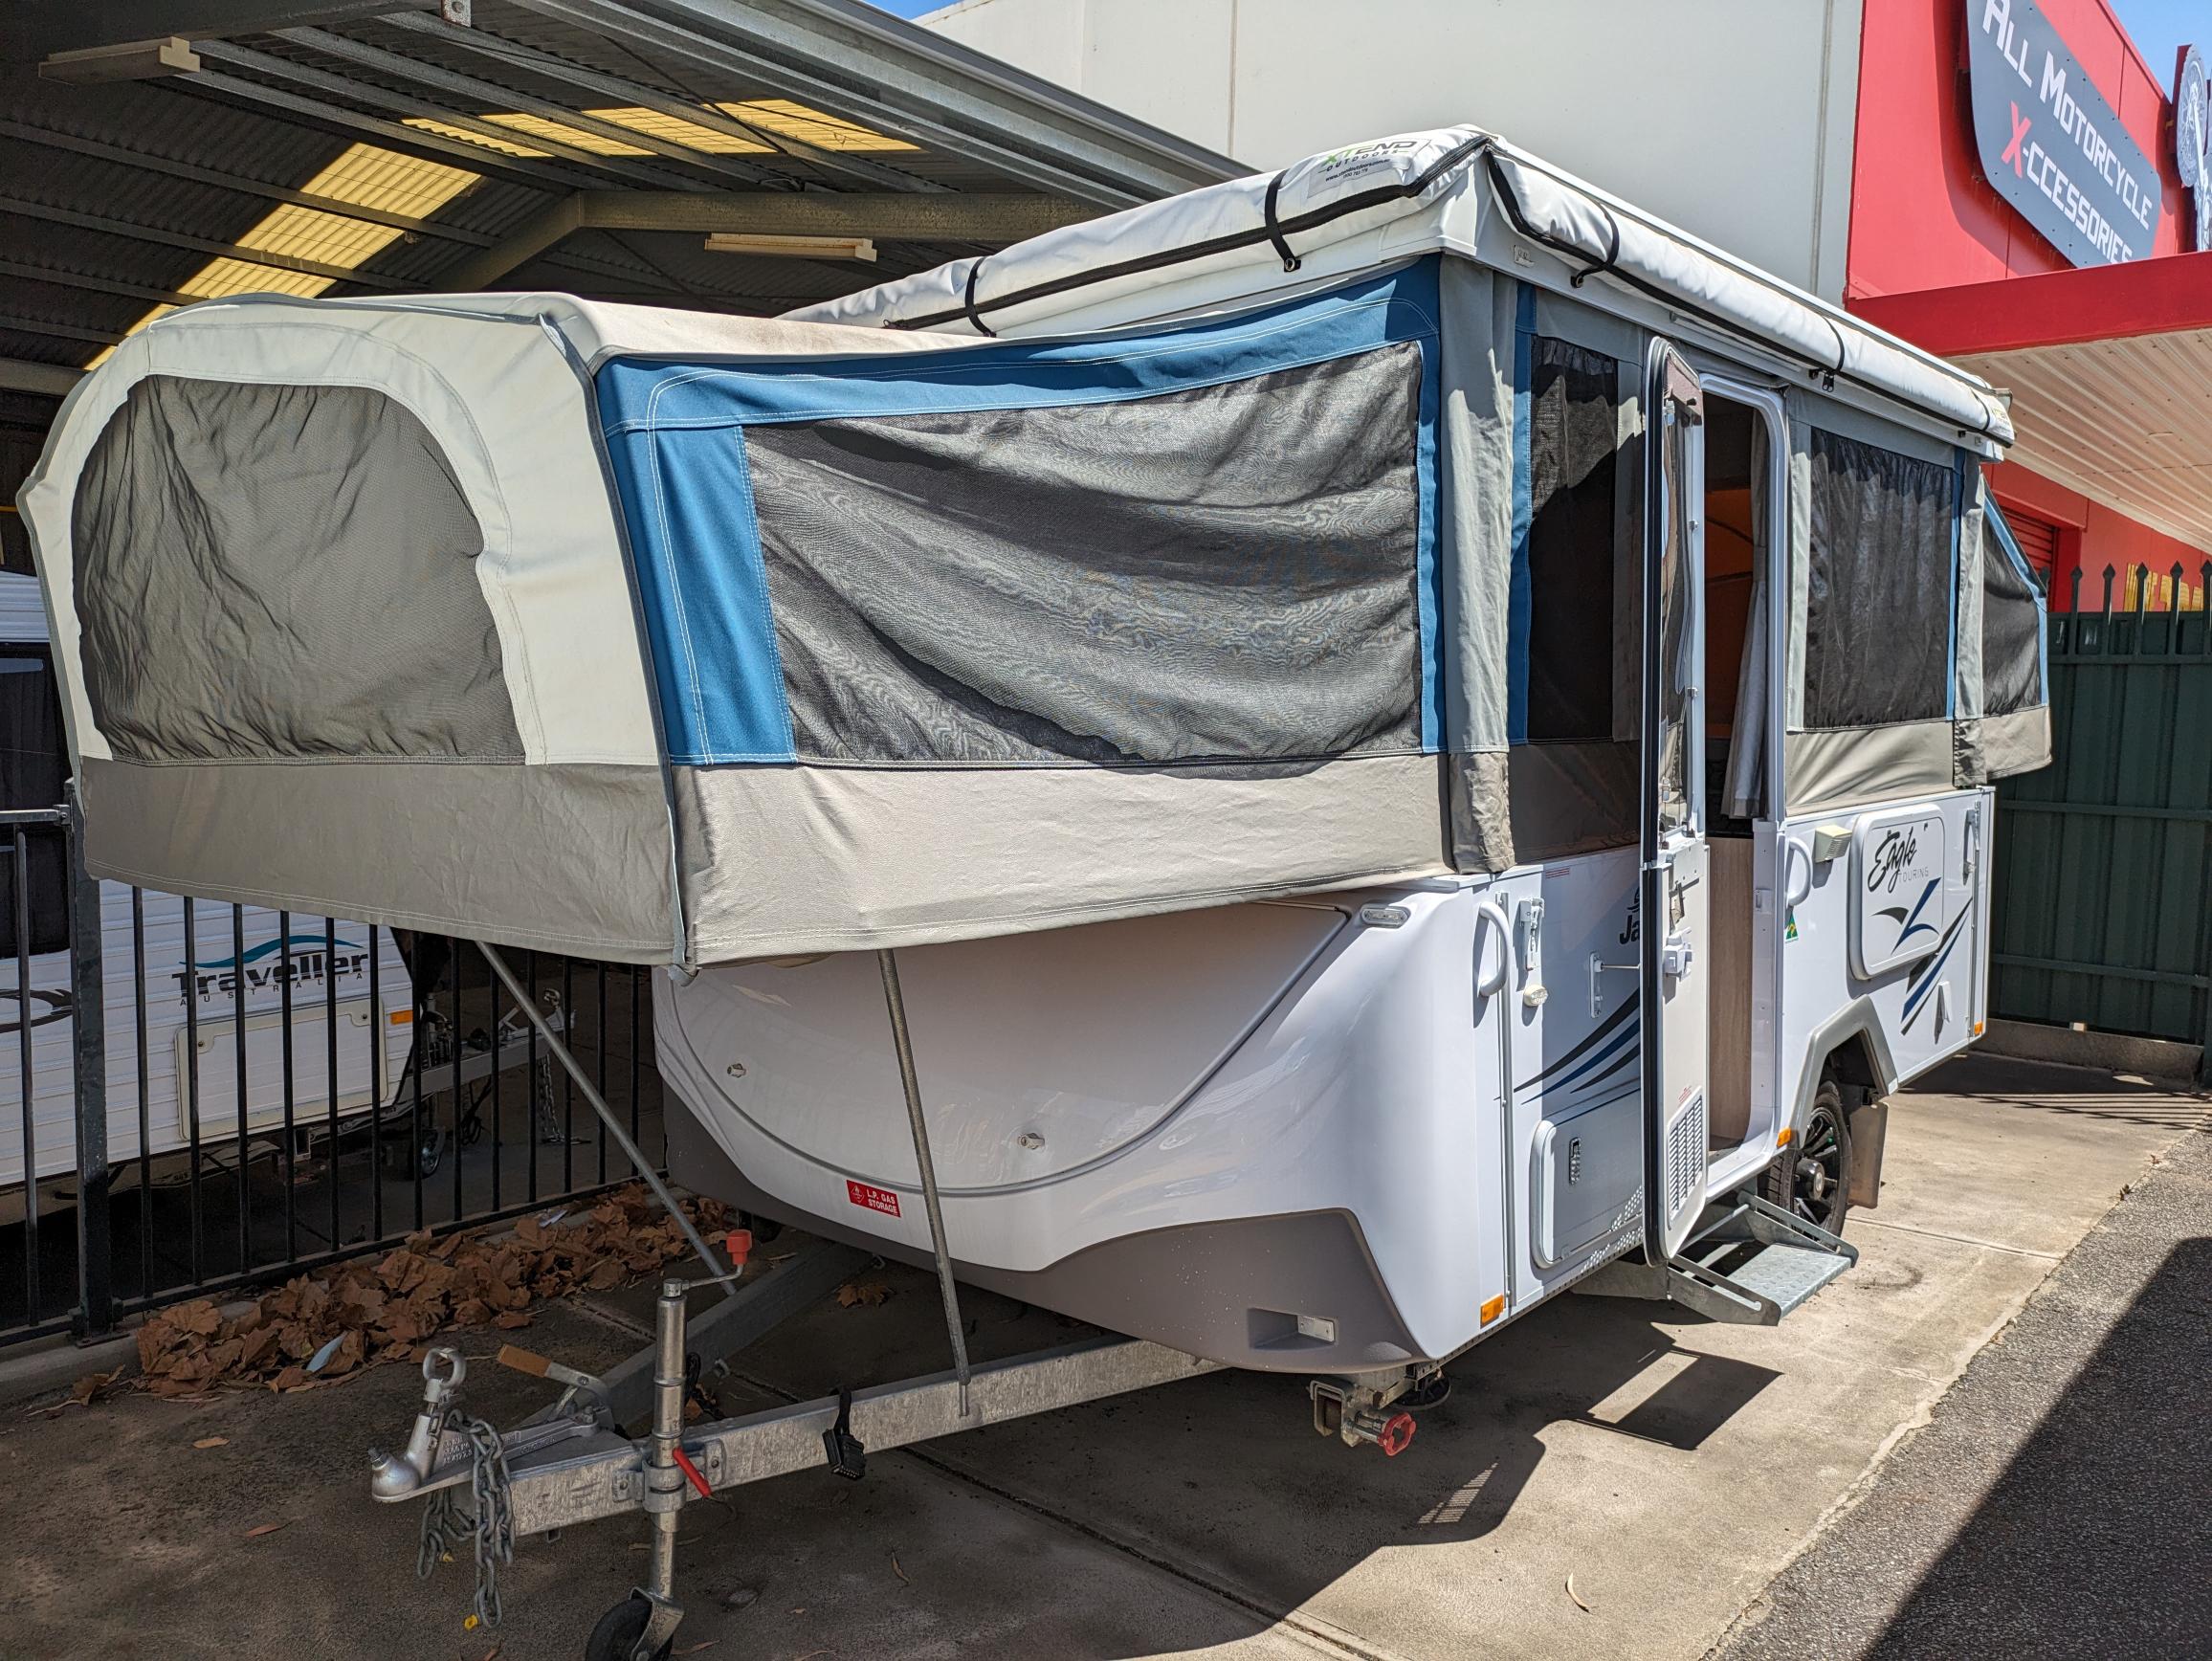 traveller caravans for sale australia